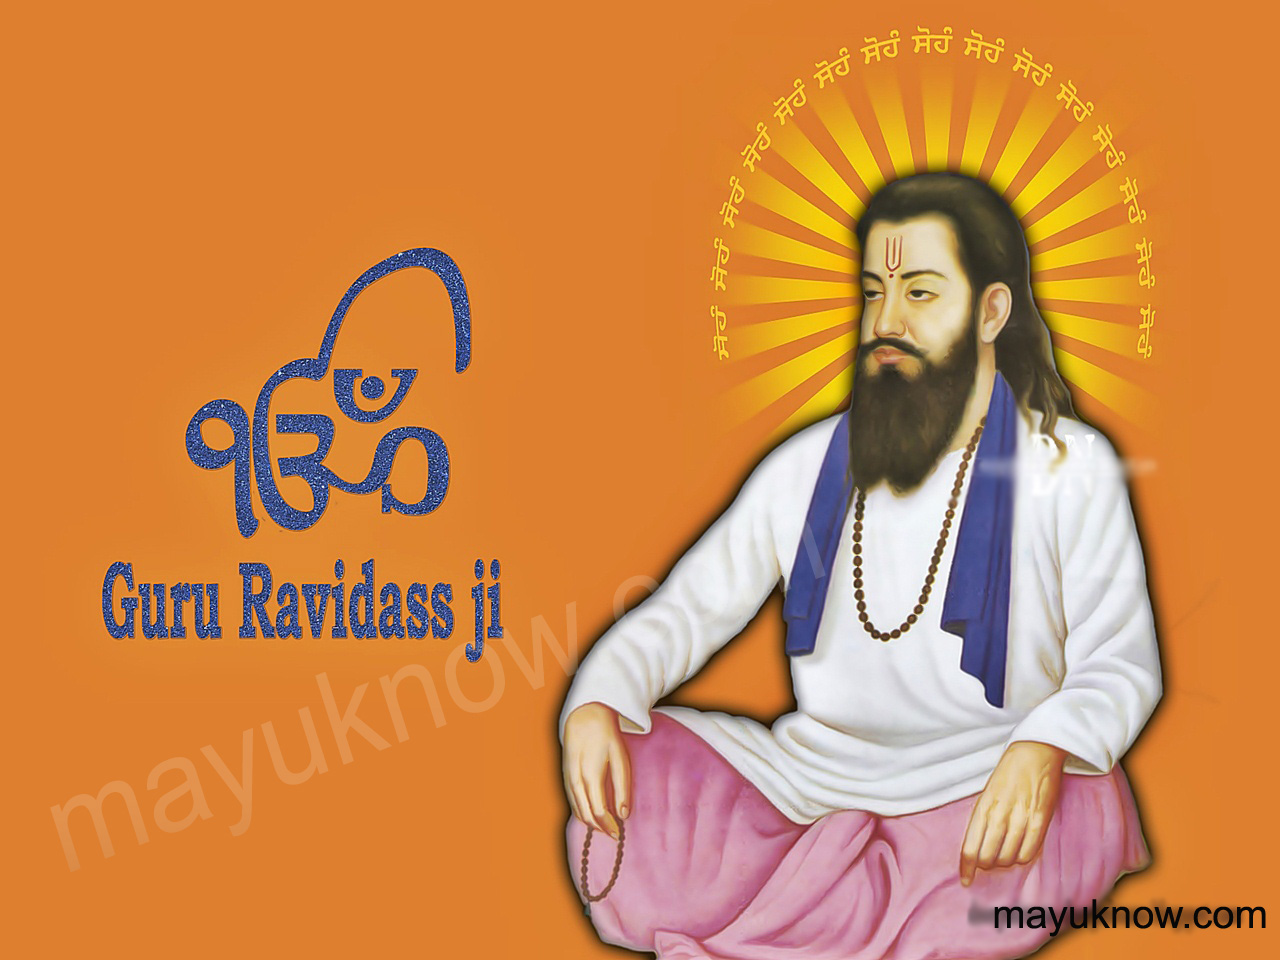 Sant Guru Ravidas Photo Image Wallpaper Full Hd Free Download - MayUknow